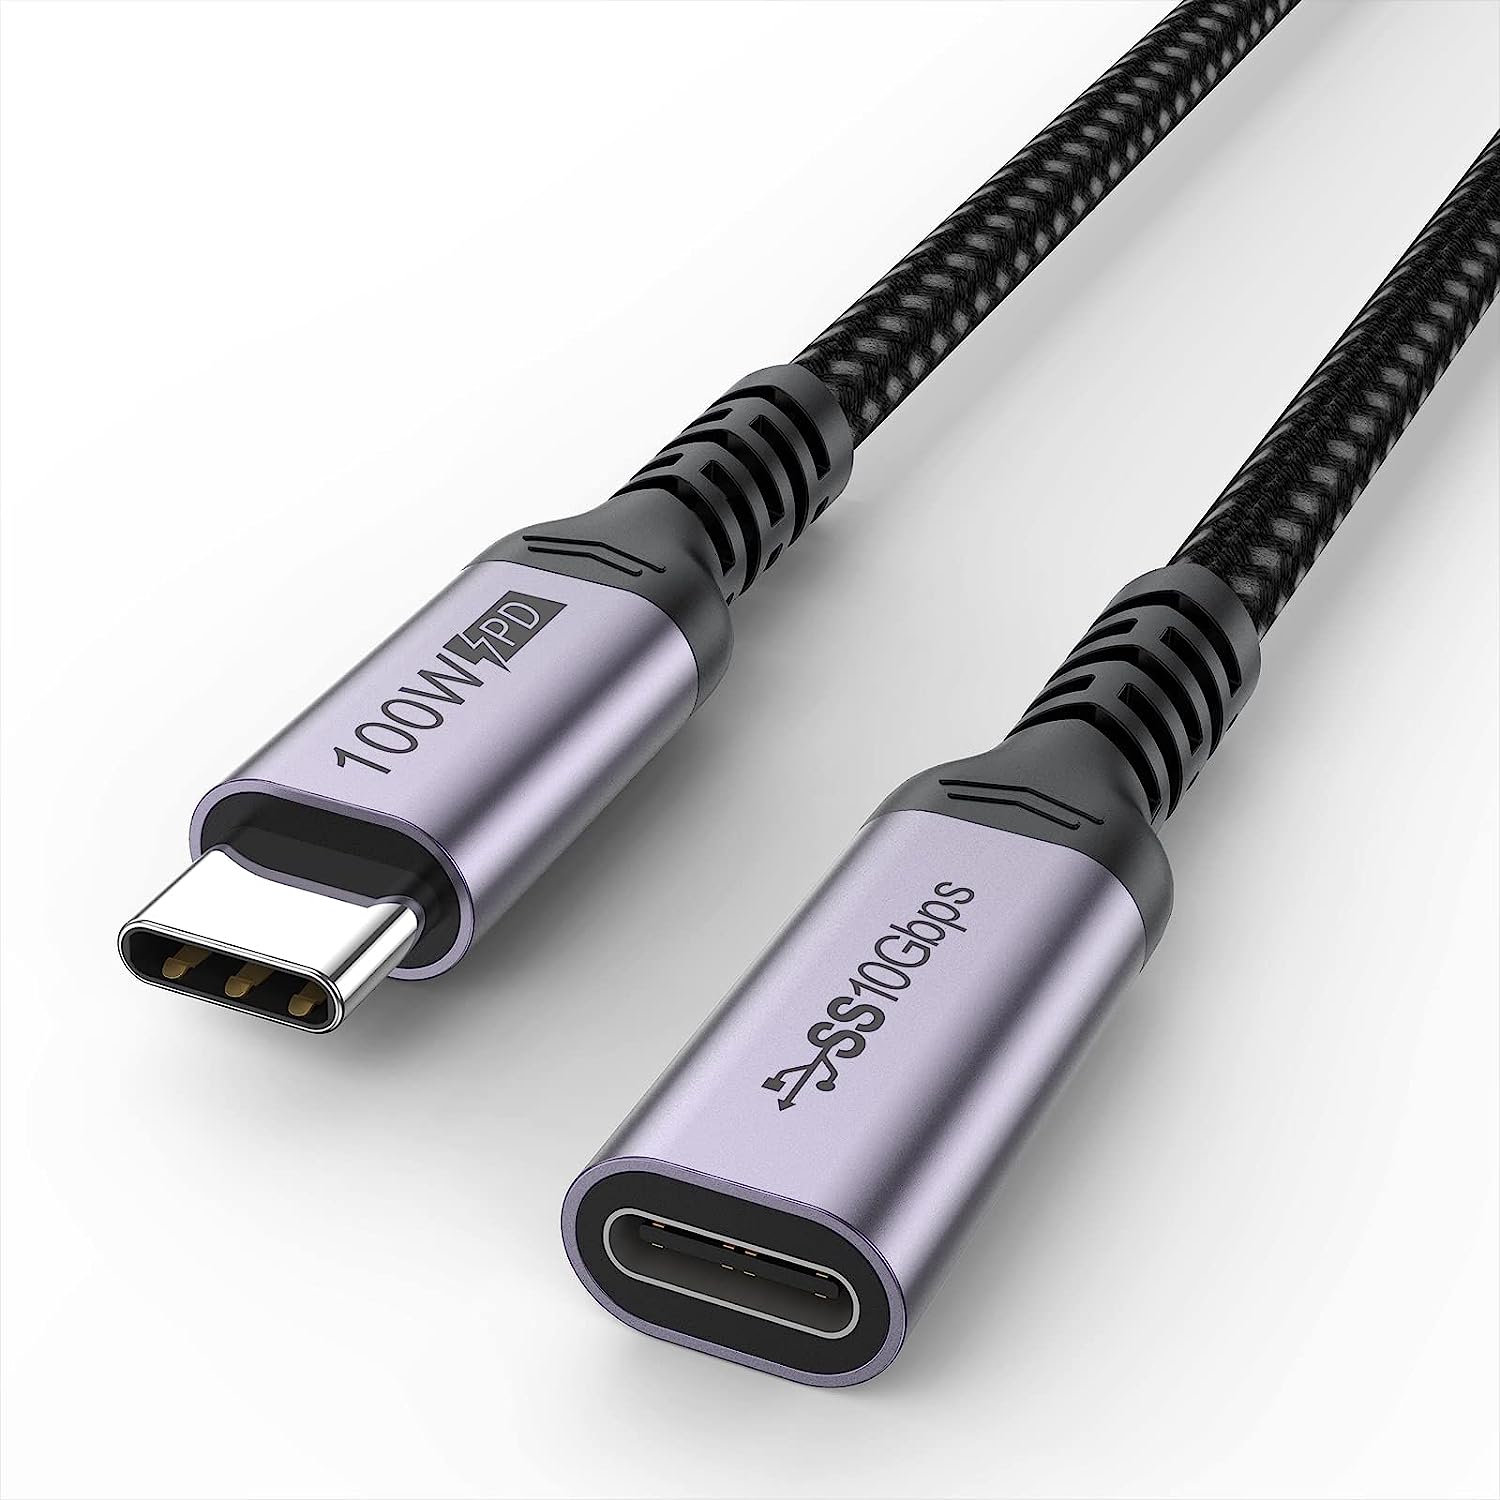 DteeDck USB C Extension Cable 6.6ft, USB C to USB C [...]